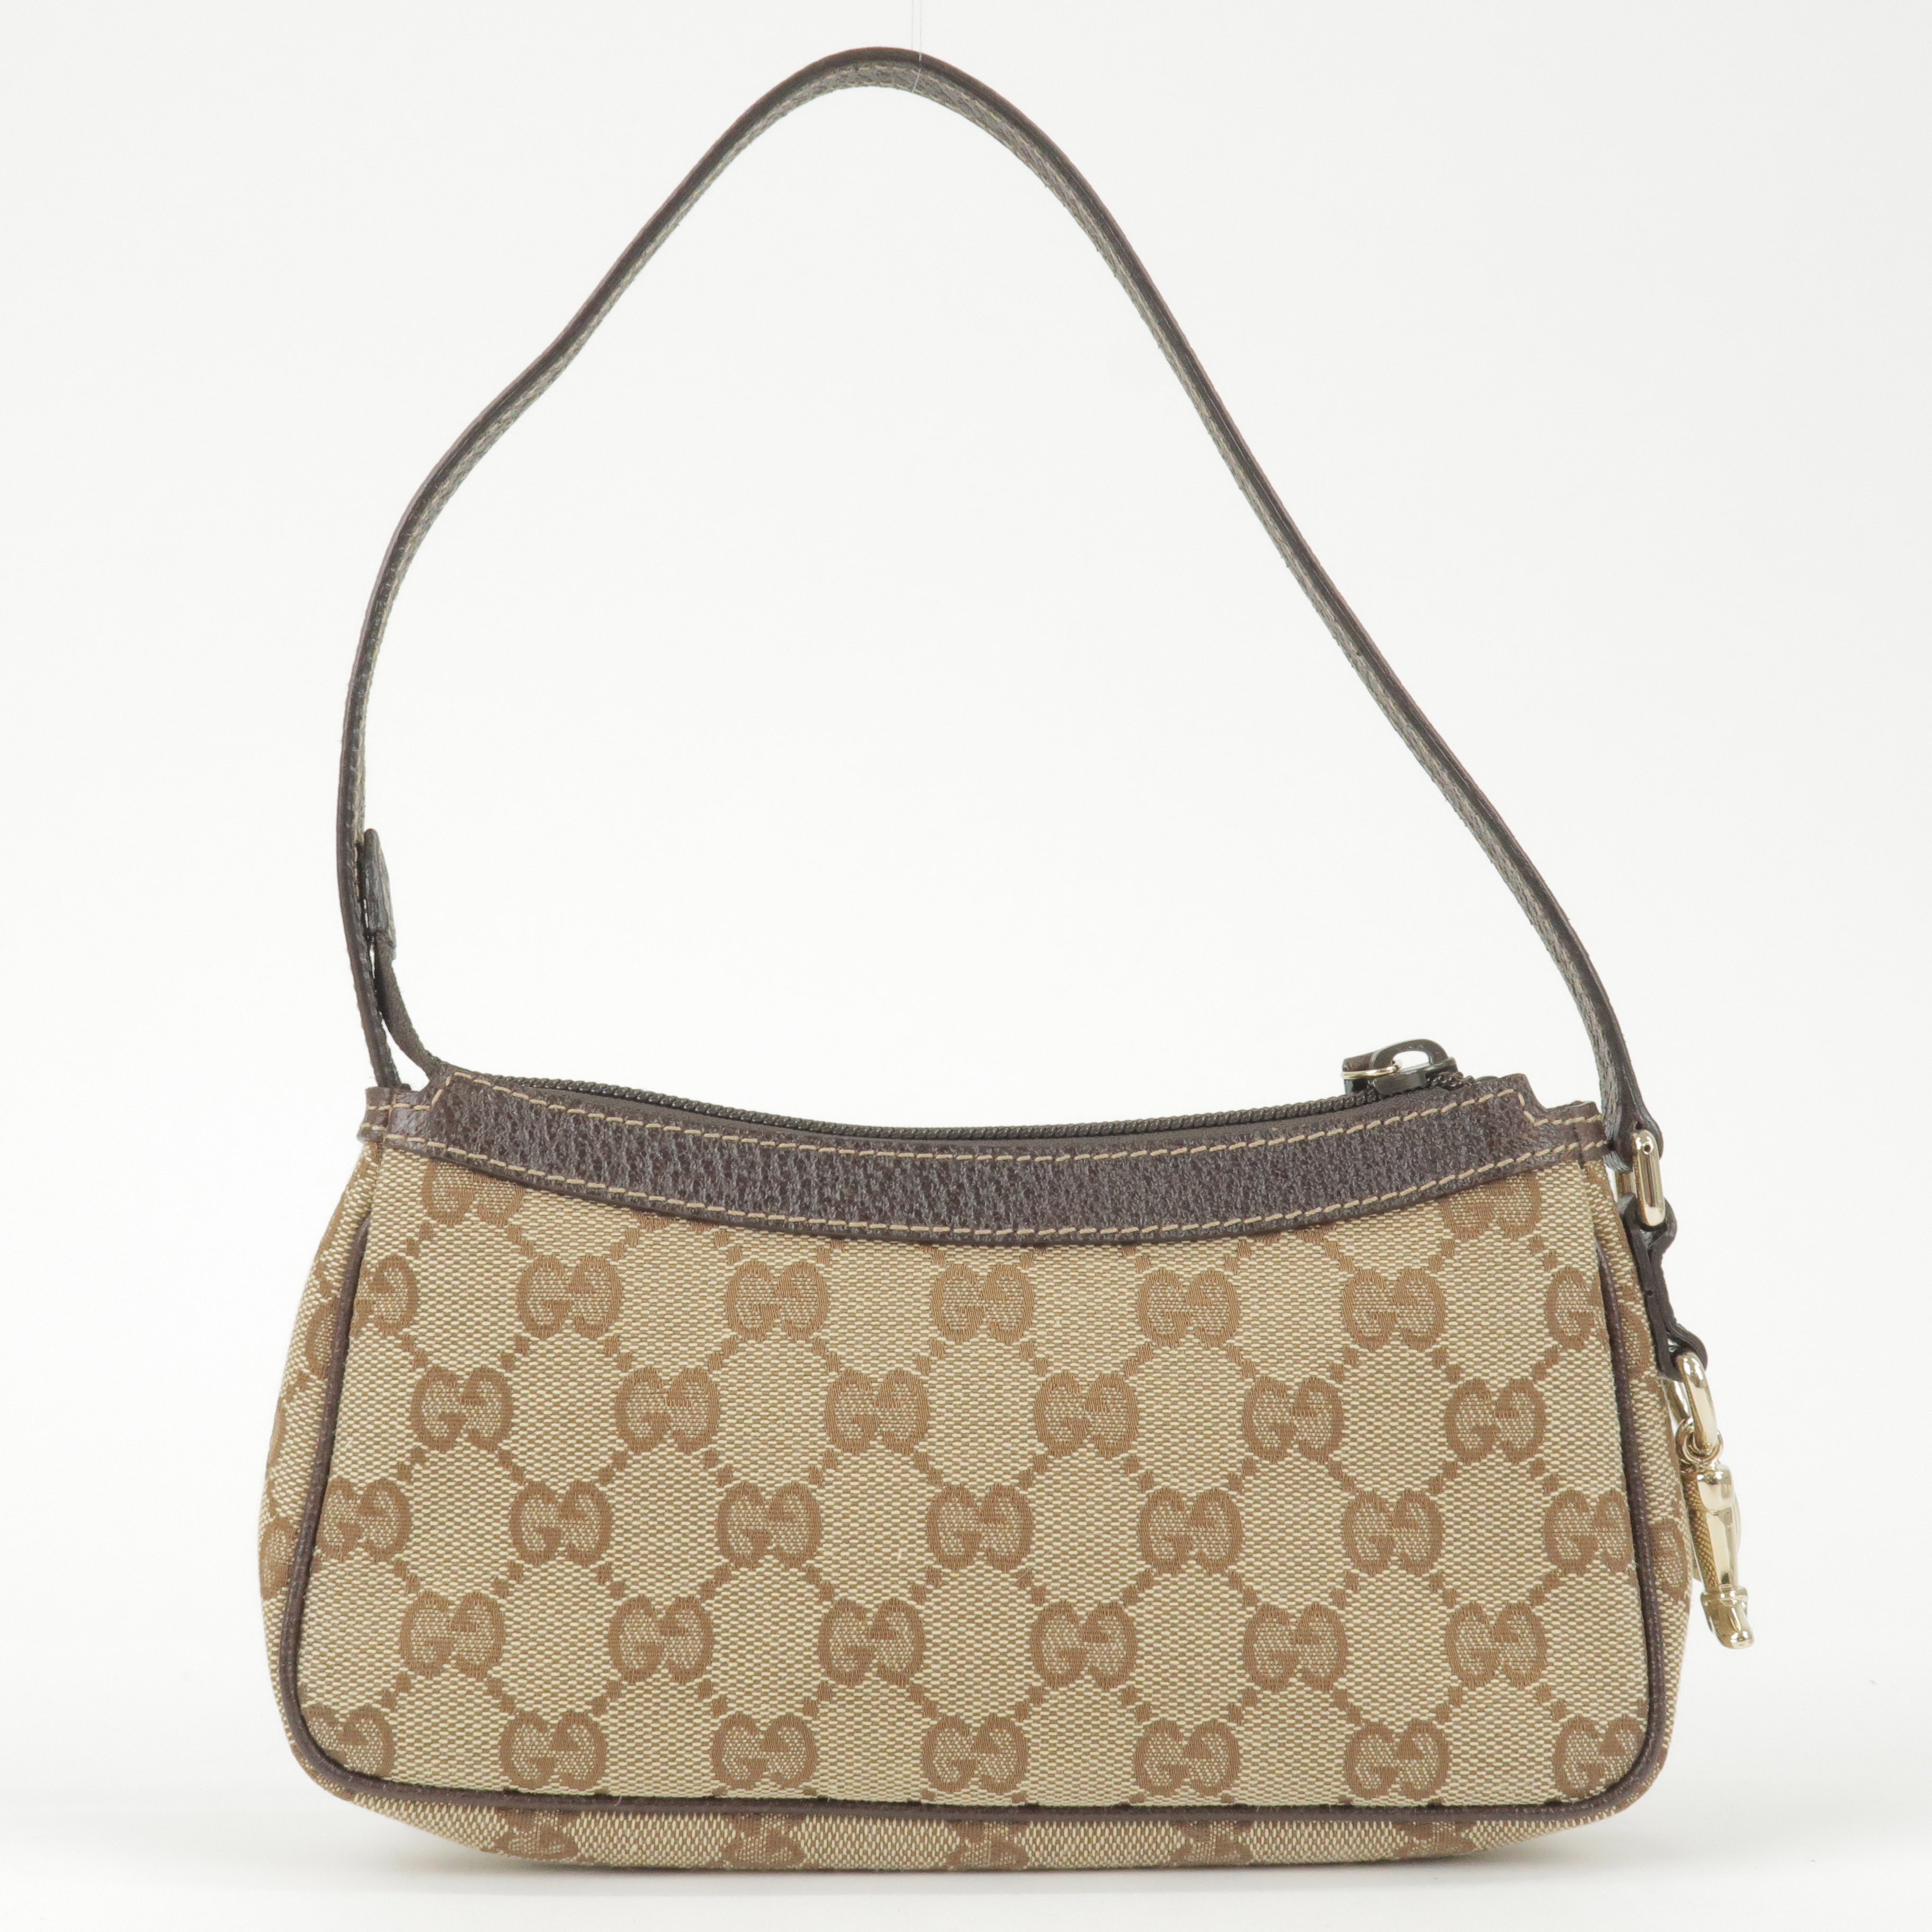 Gucci Soho Small Leather Tote Bag w/ Chain Straps, Black | Gucci soho bag,  Black leather handbags, Gucci tote bag